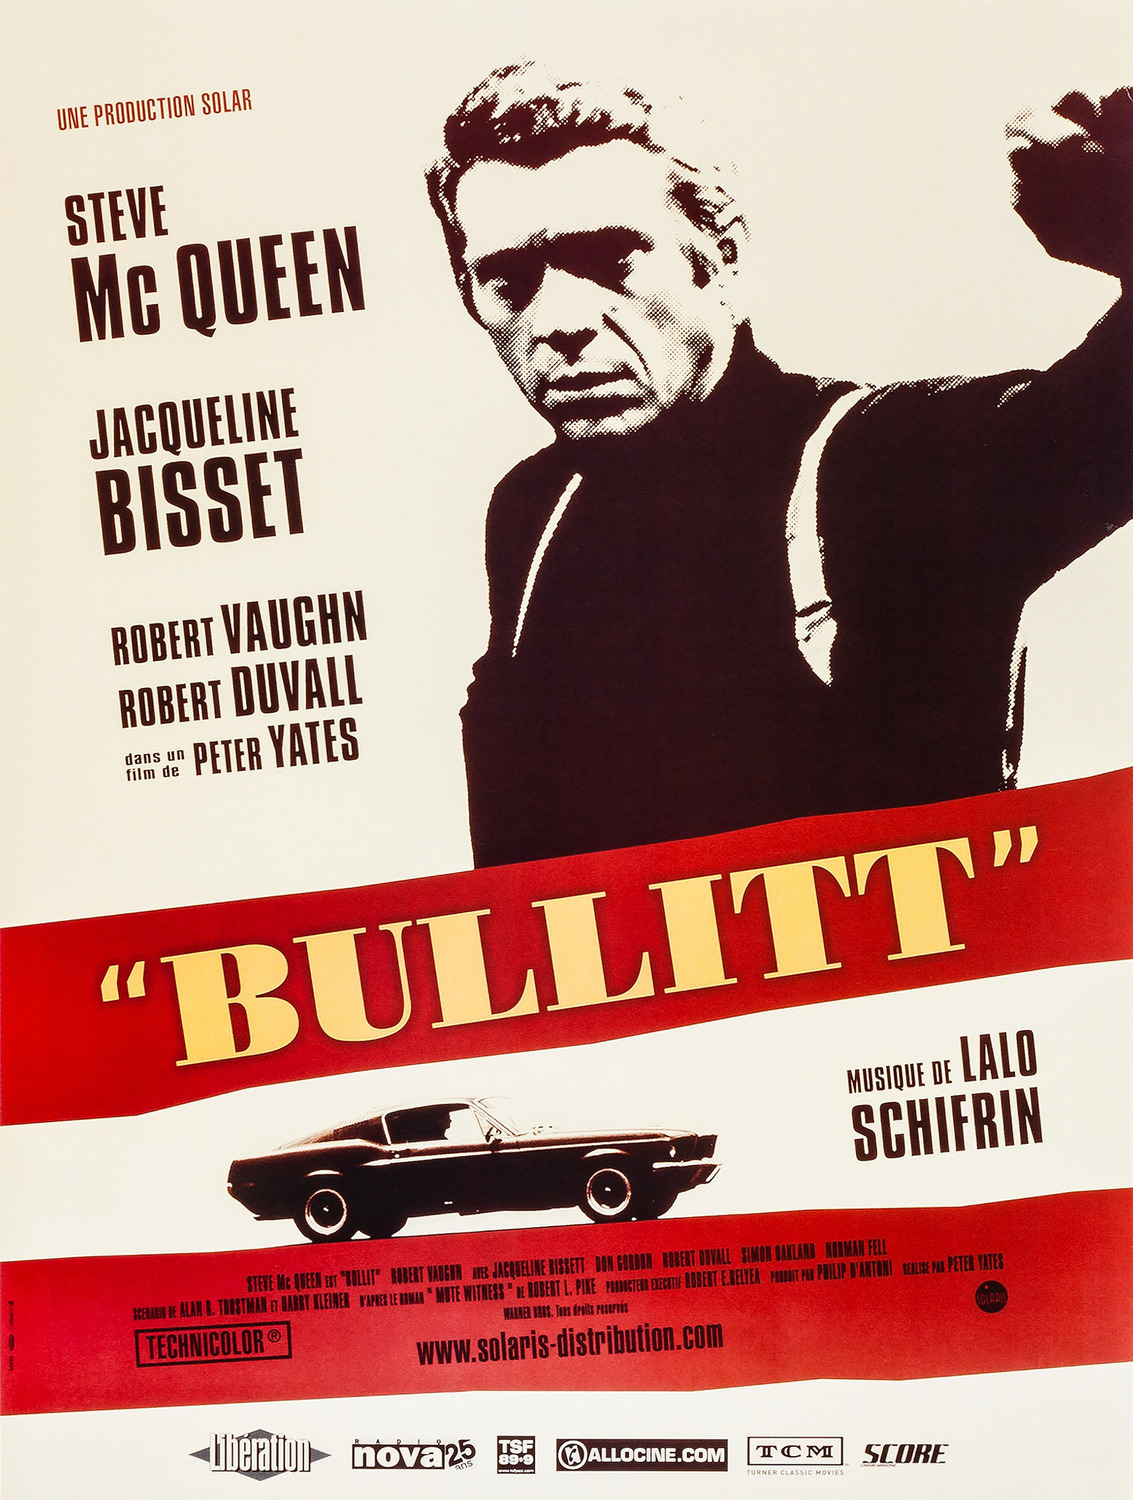 Extra Large Movie Poster Image for Bullitt (#19 of 19)